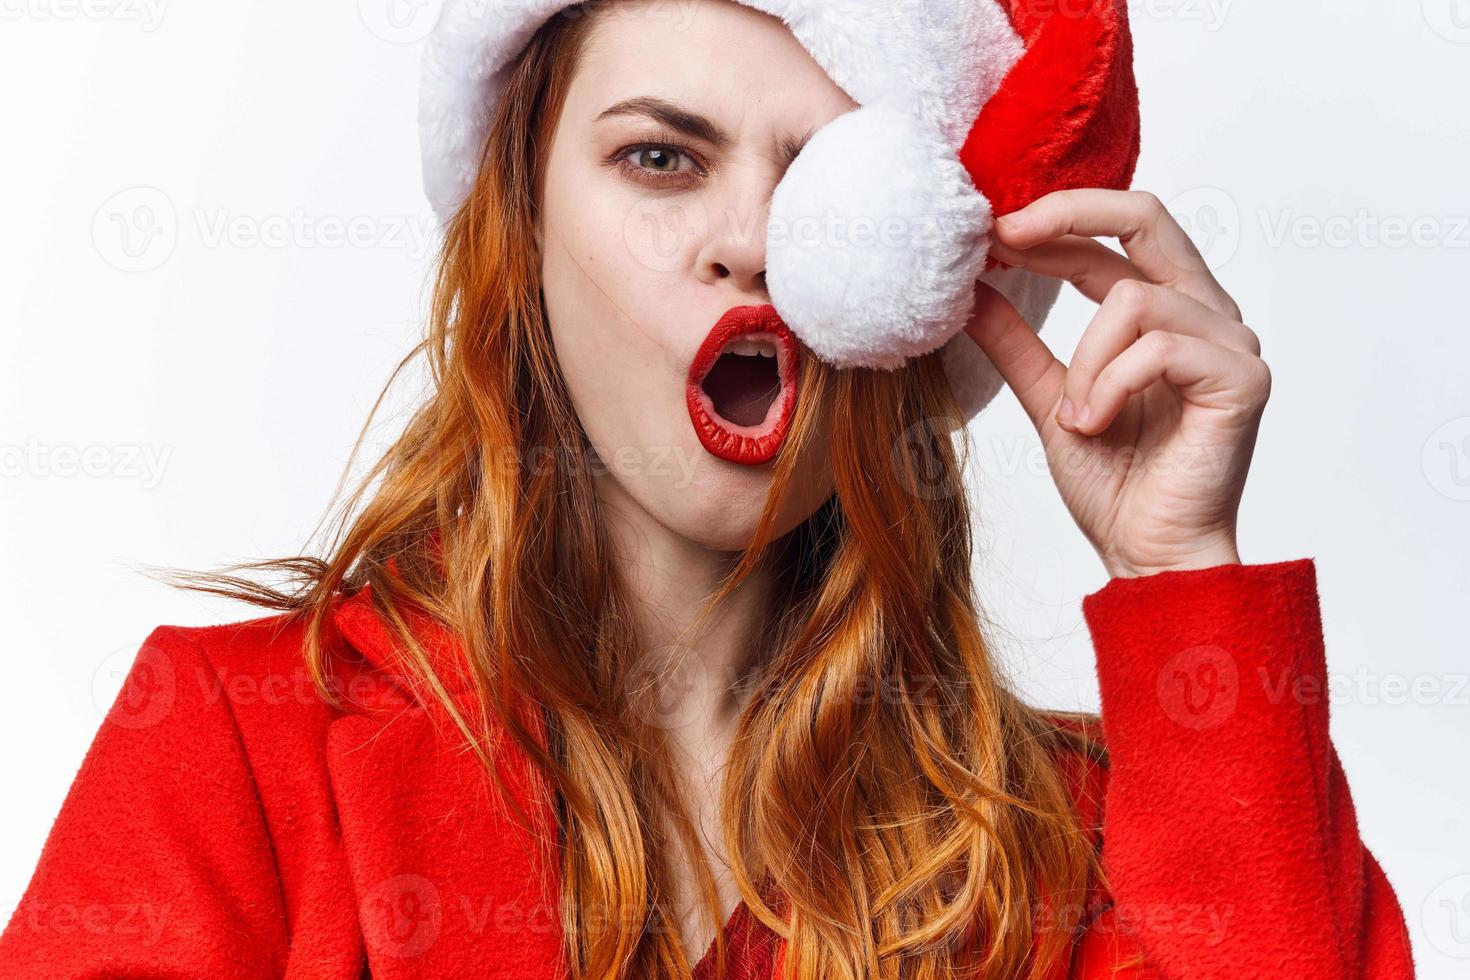 woman wearing santa hat emotions fun posing studio fashion photo